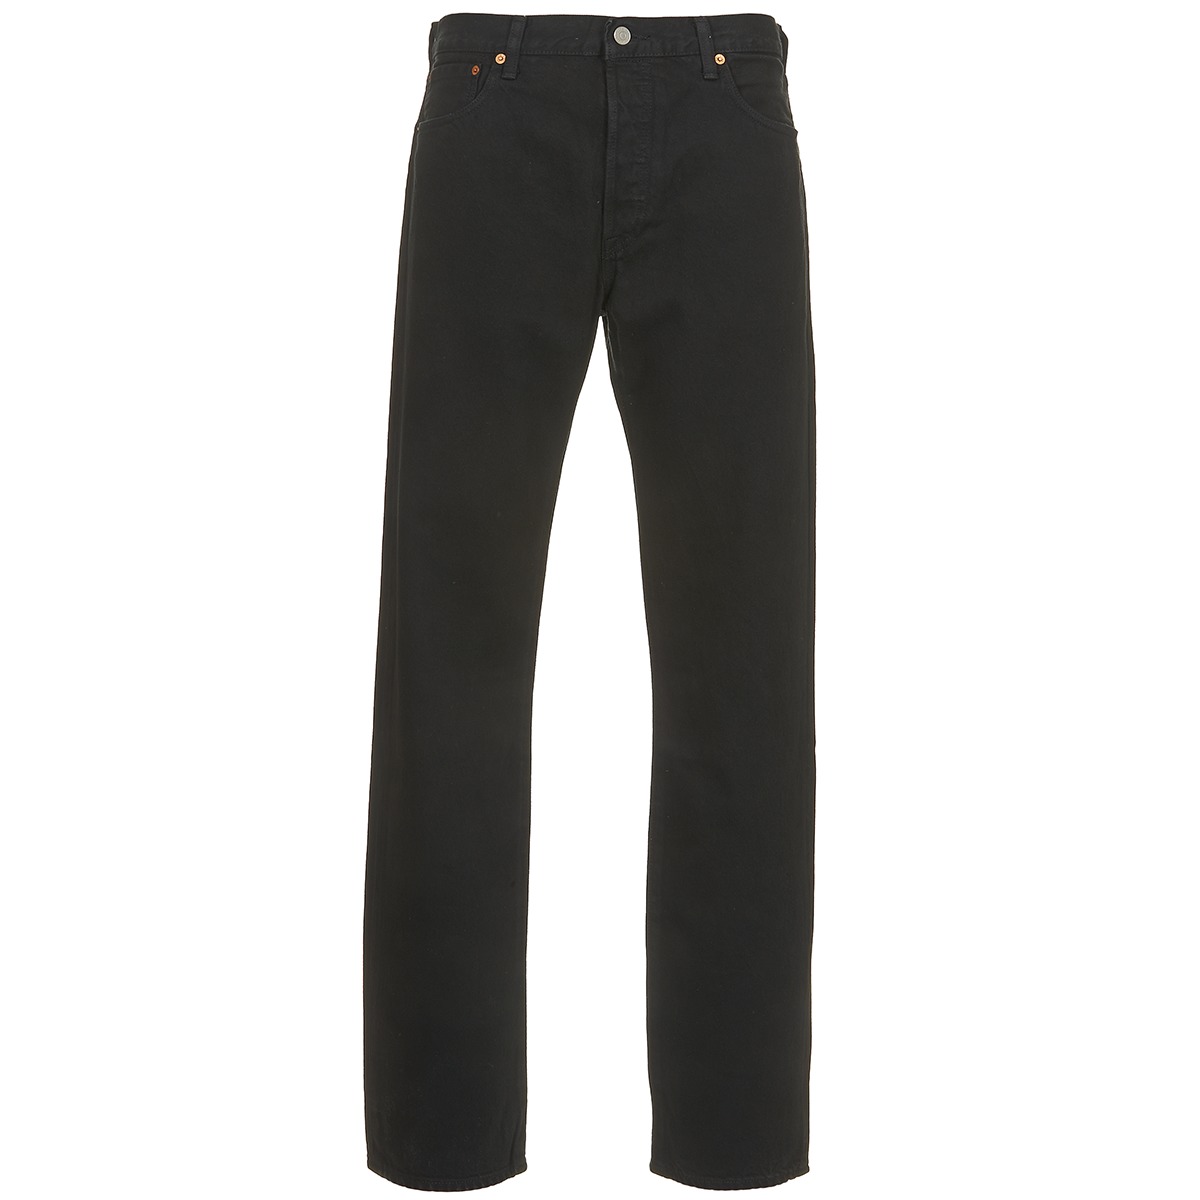 Levi's - 501 Jeans Original Fit Black 0165 - W 31 - L 32 - Regular-fit